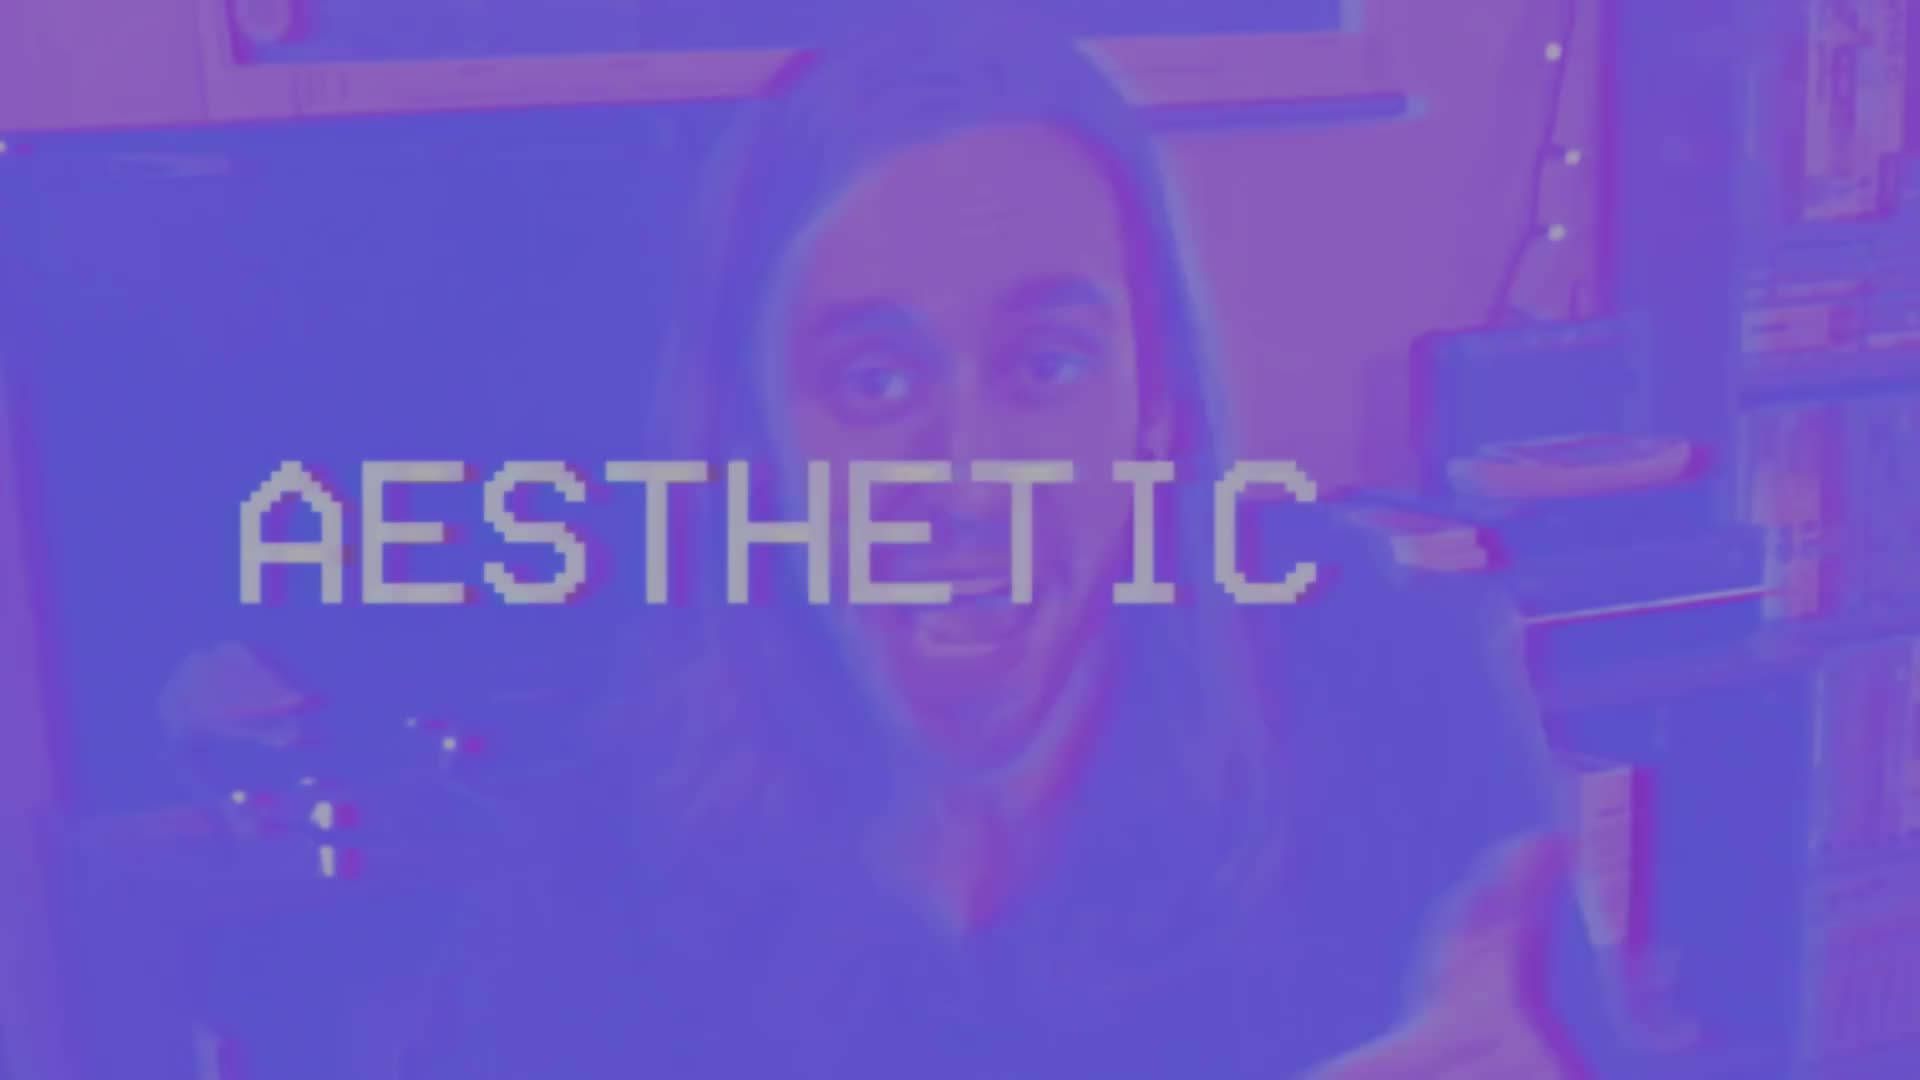 Download Aesthetic Retro Vhs Video Wallpaper